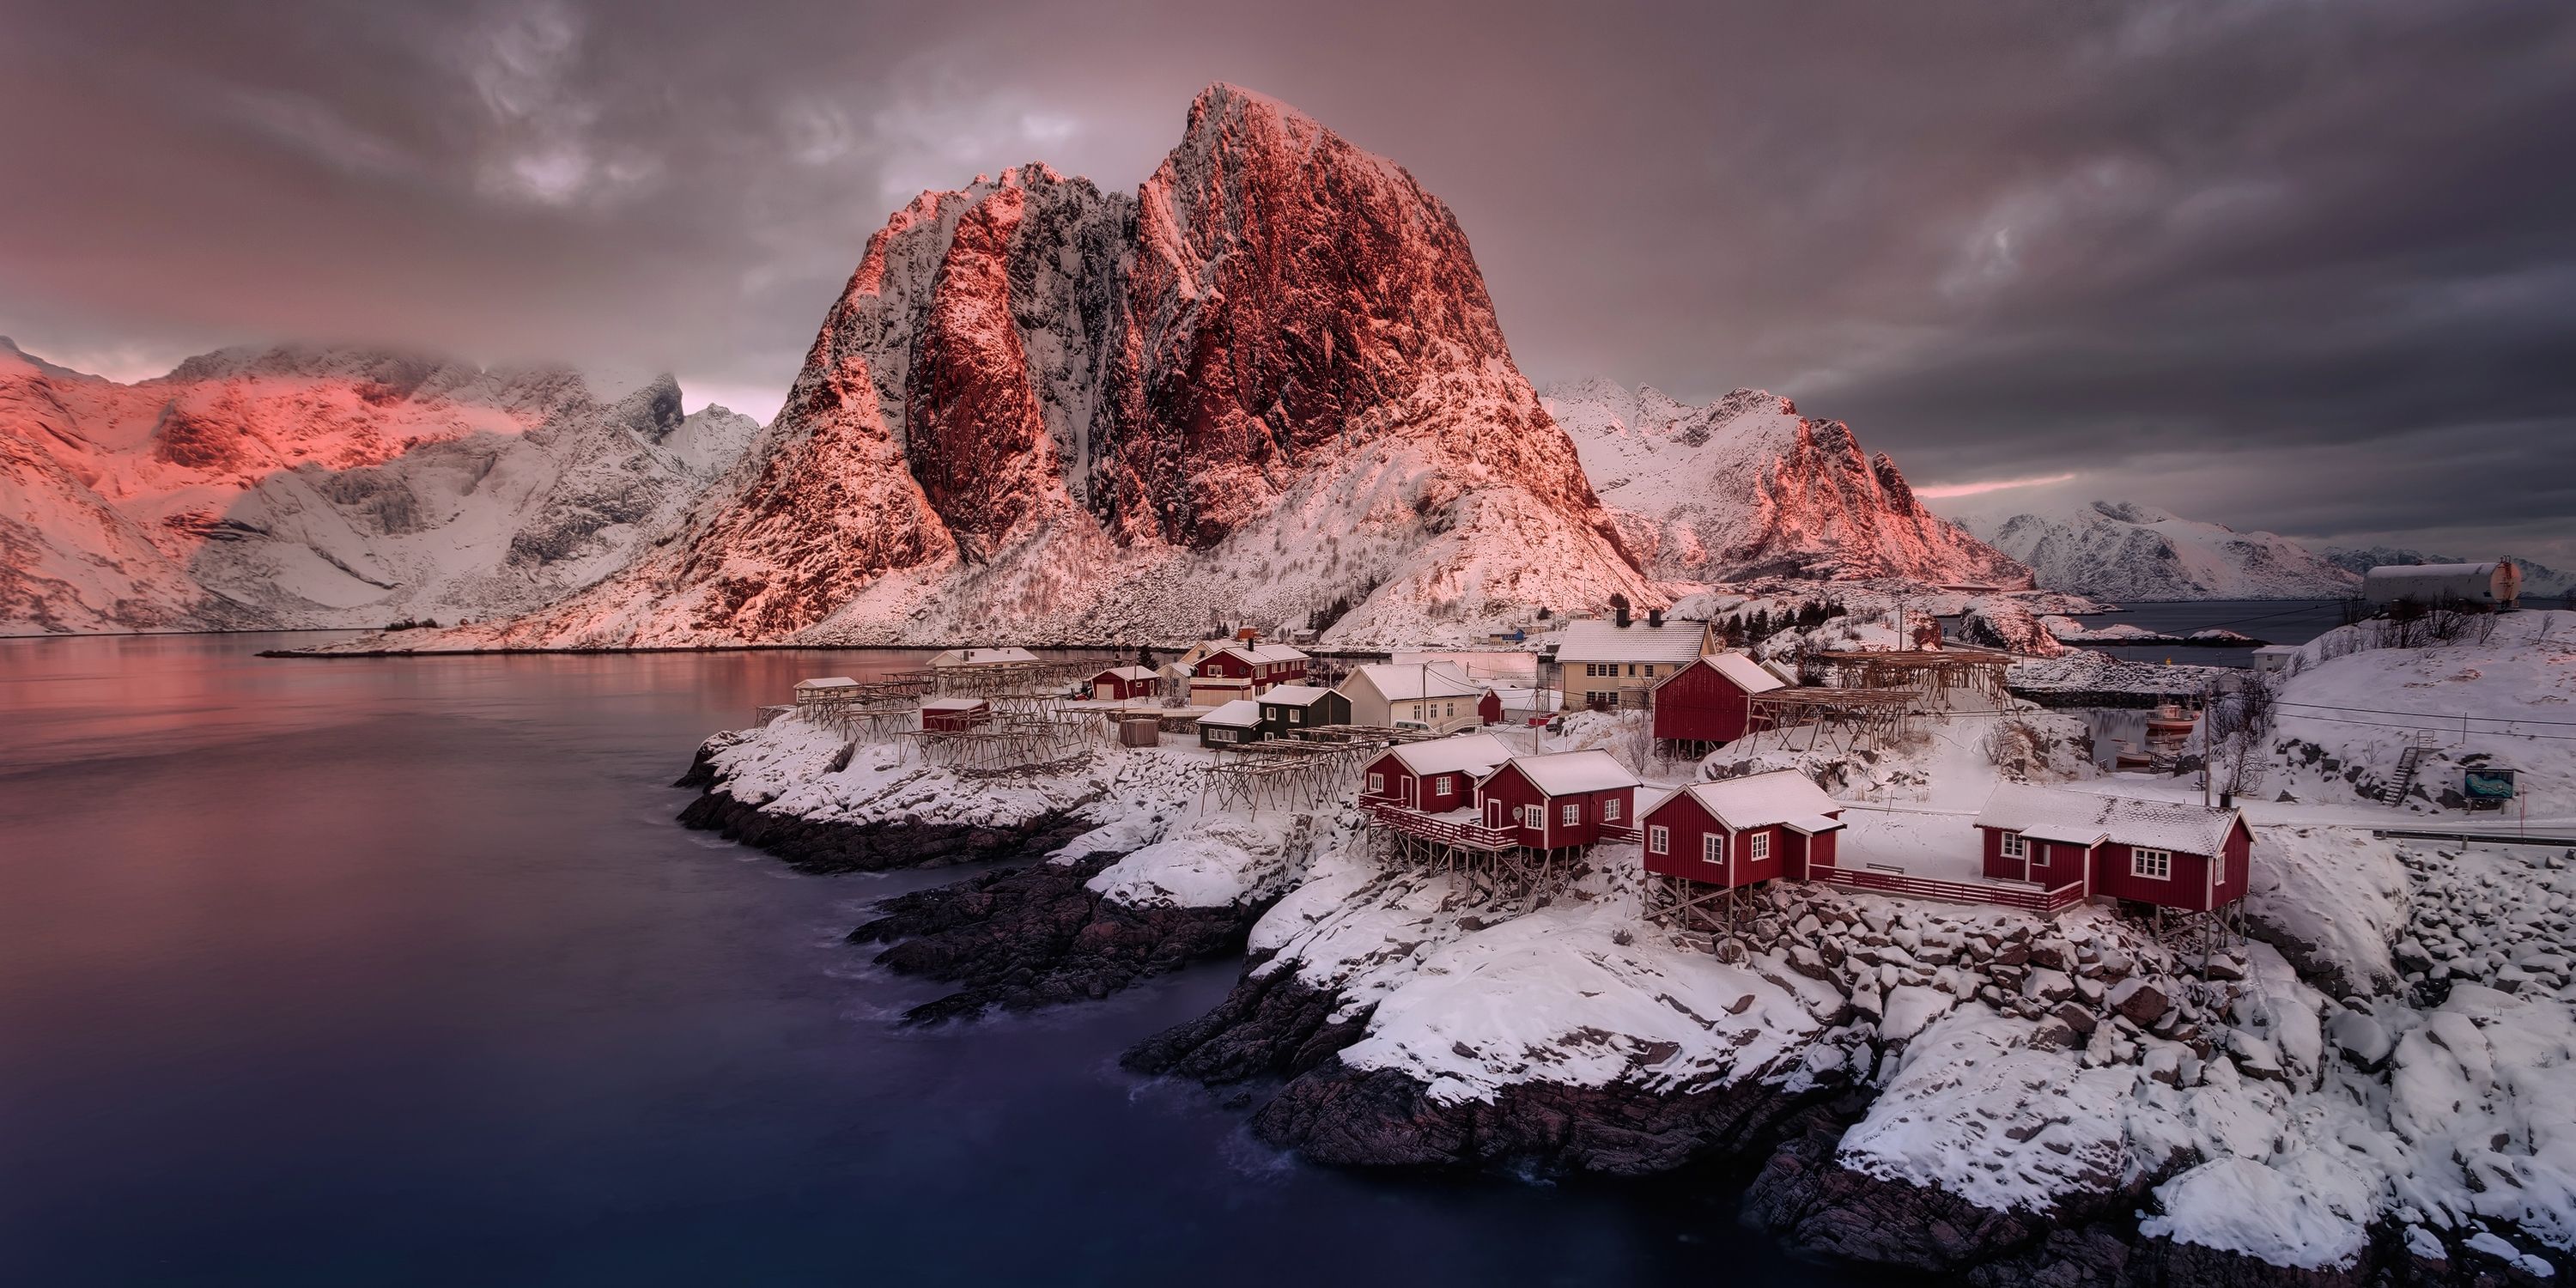 Wallpapers Norway village houses island on the desktop